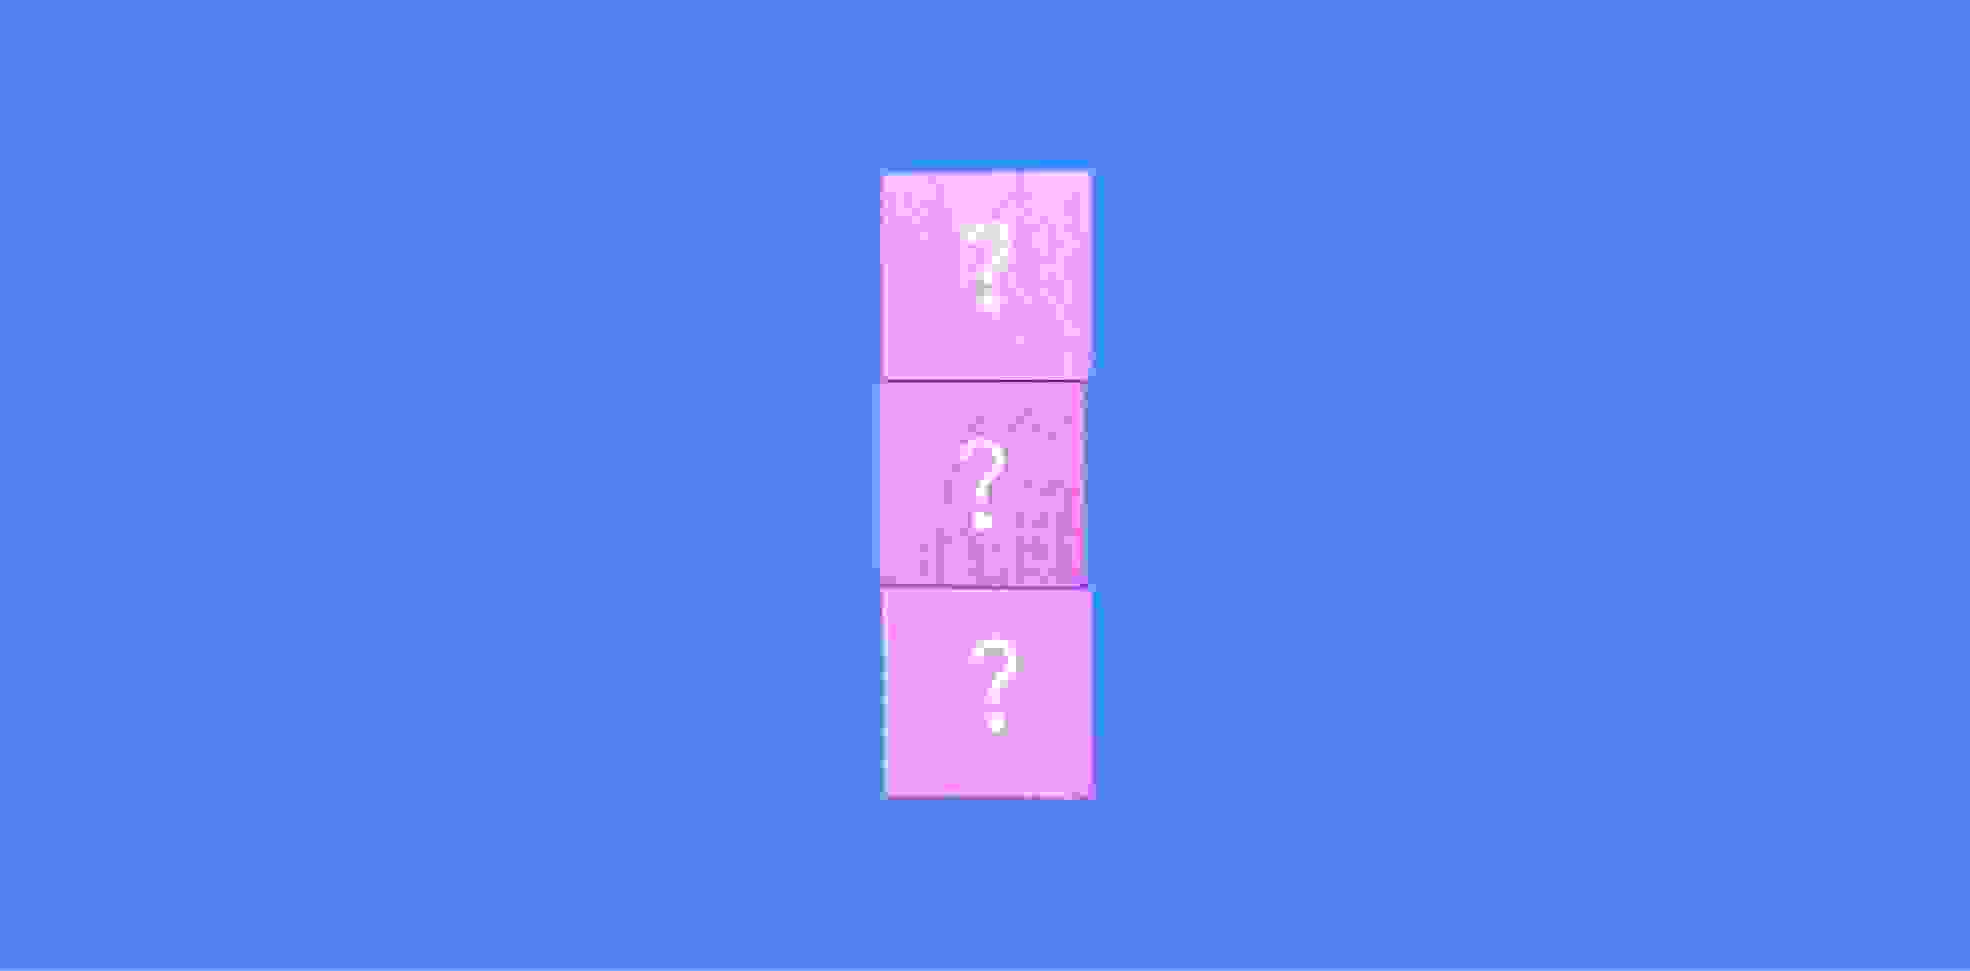 Tres cubos con signos de interrogación sobre un fondo azul.